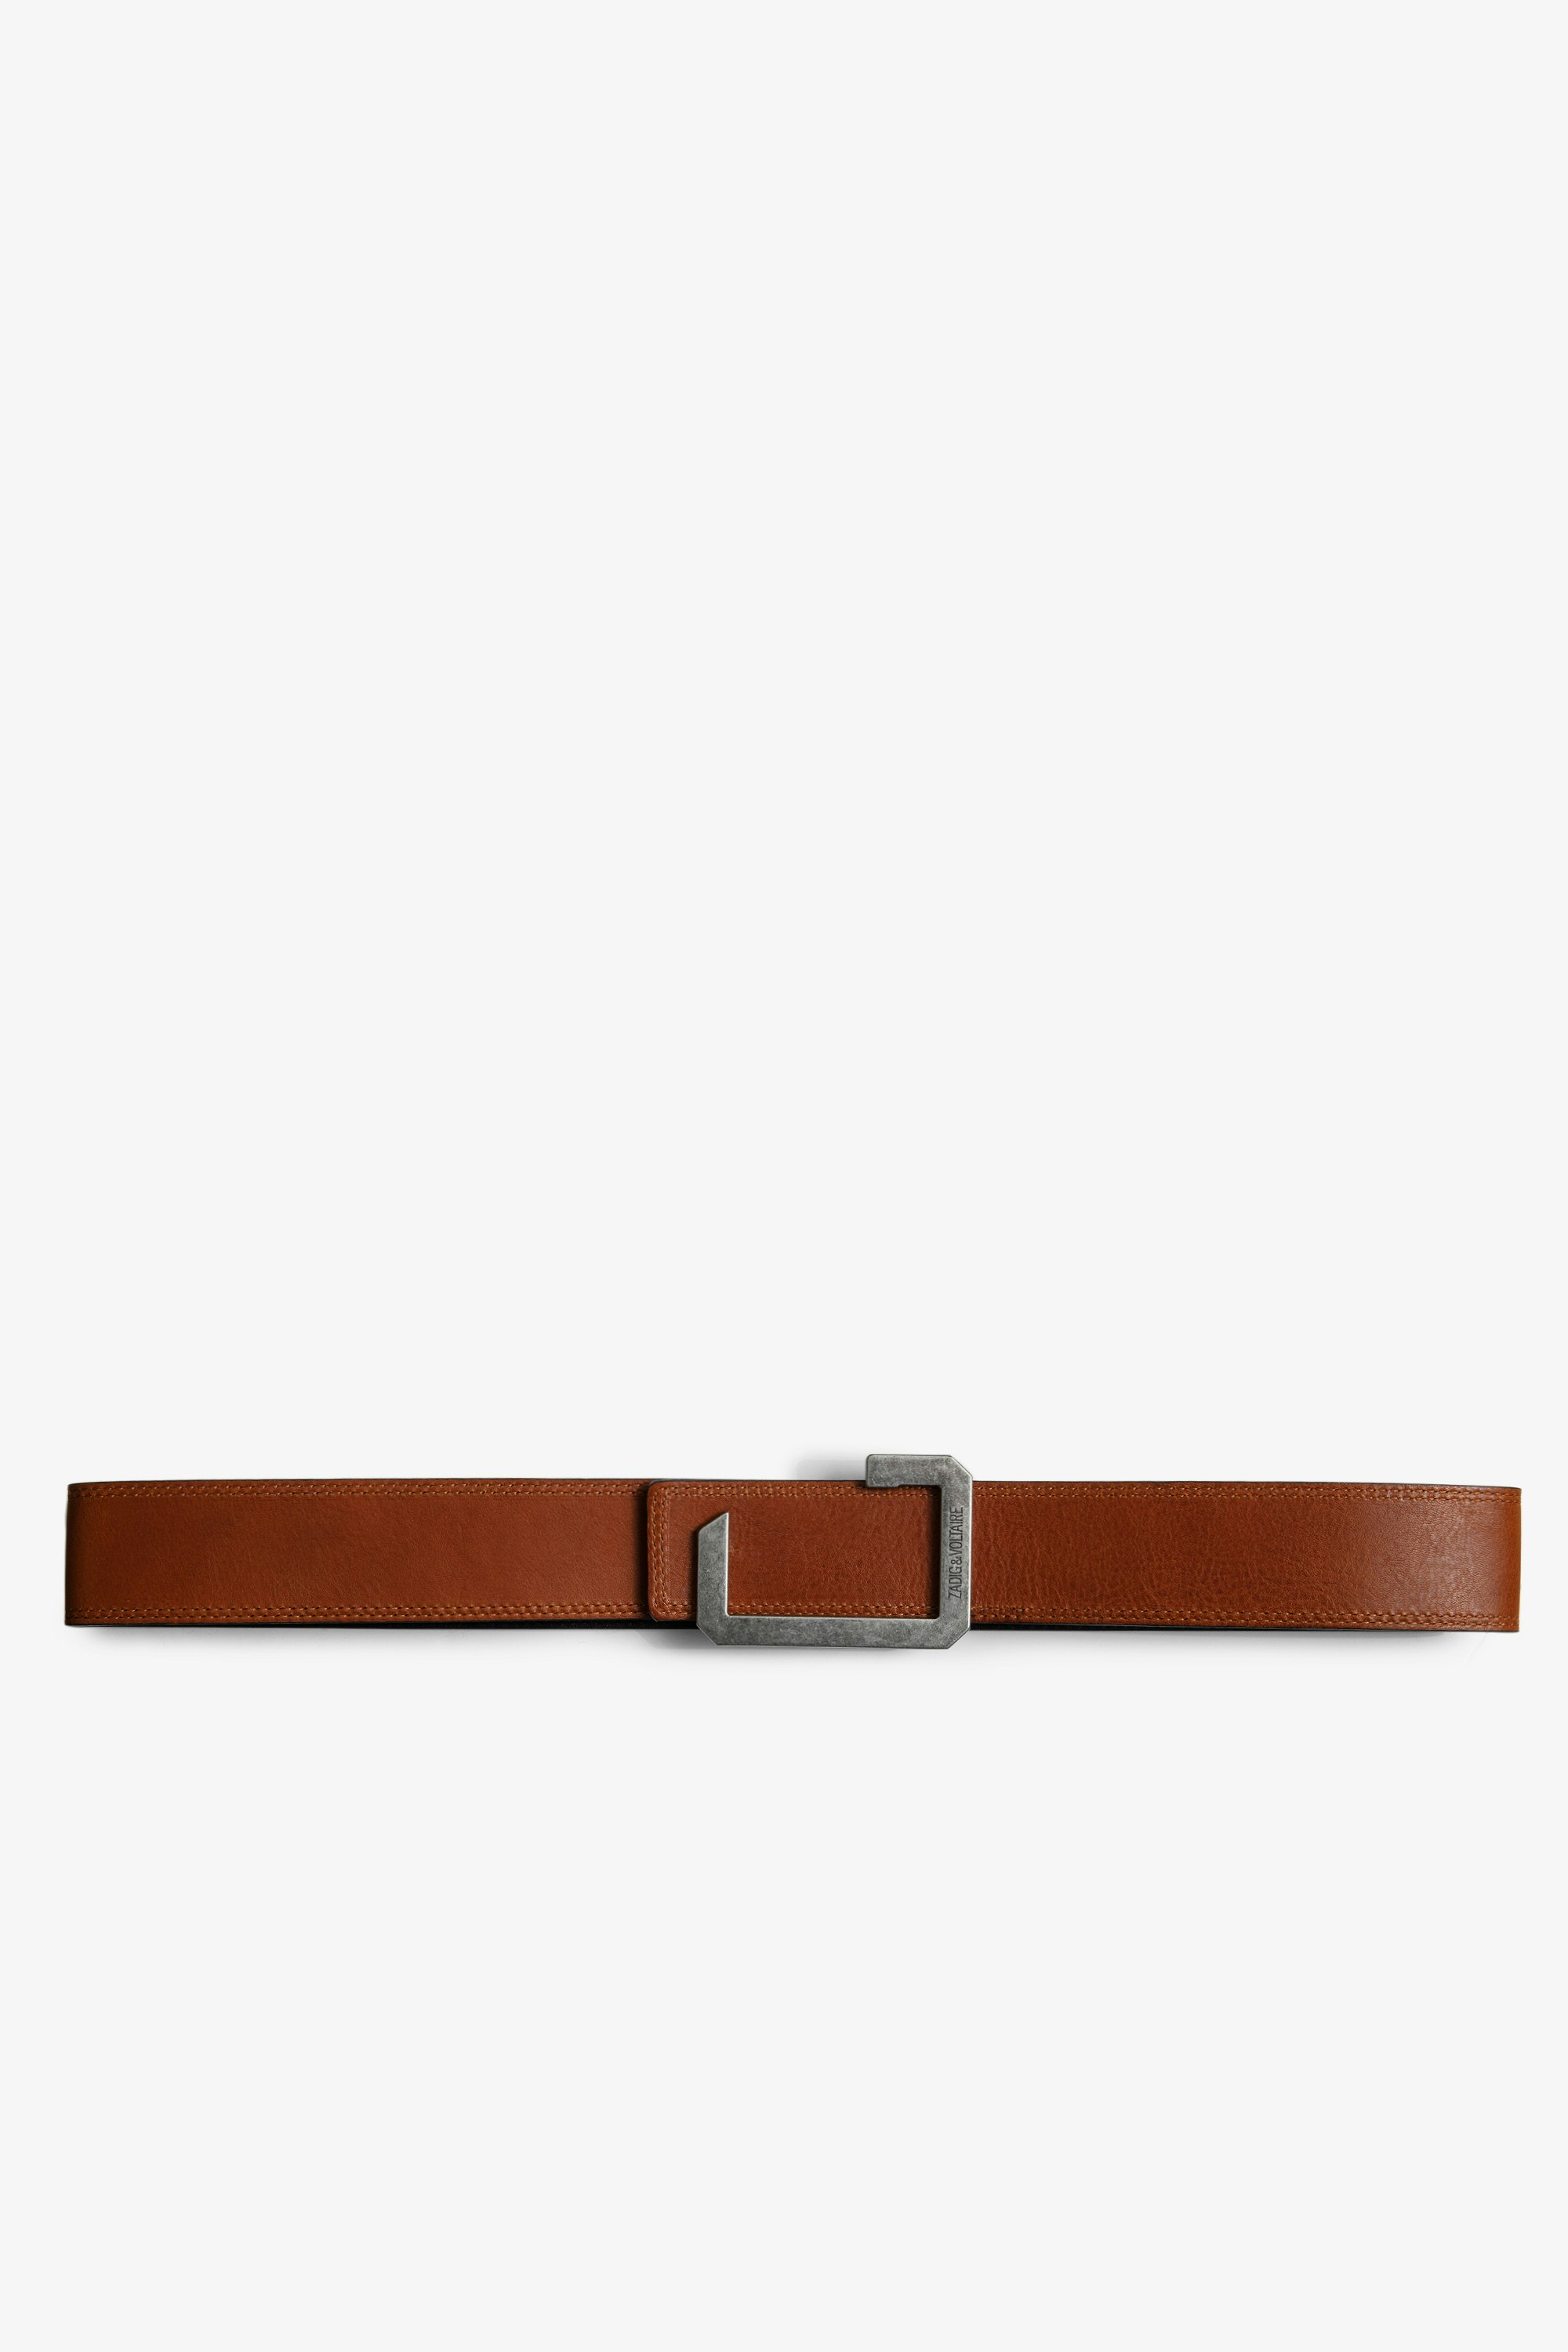 The Reversible Belt Leather Men's reversible cognac leather belt